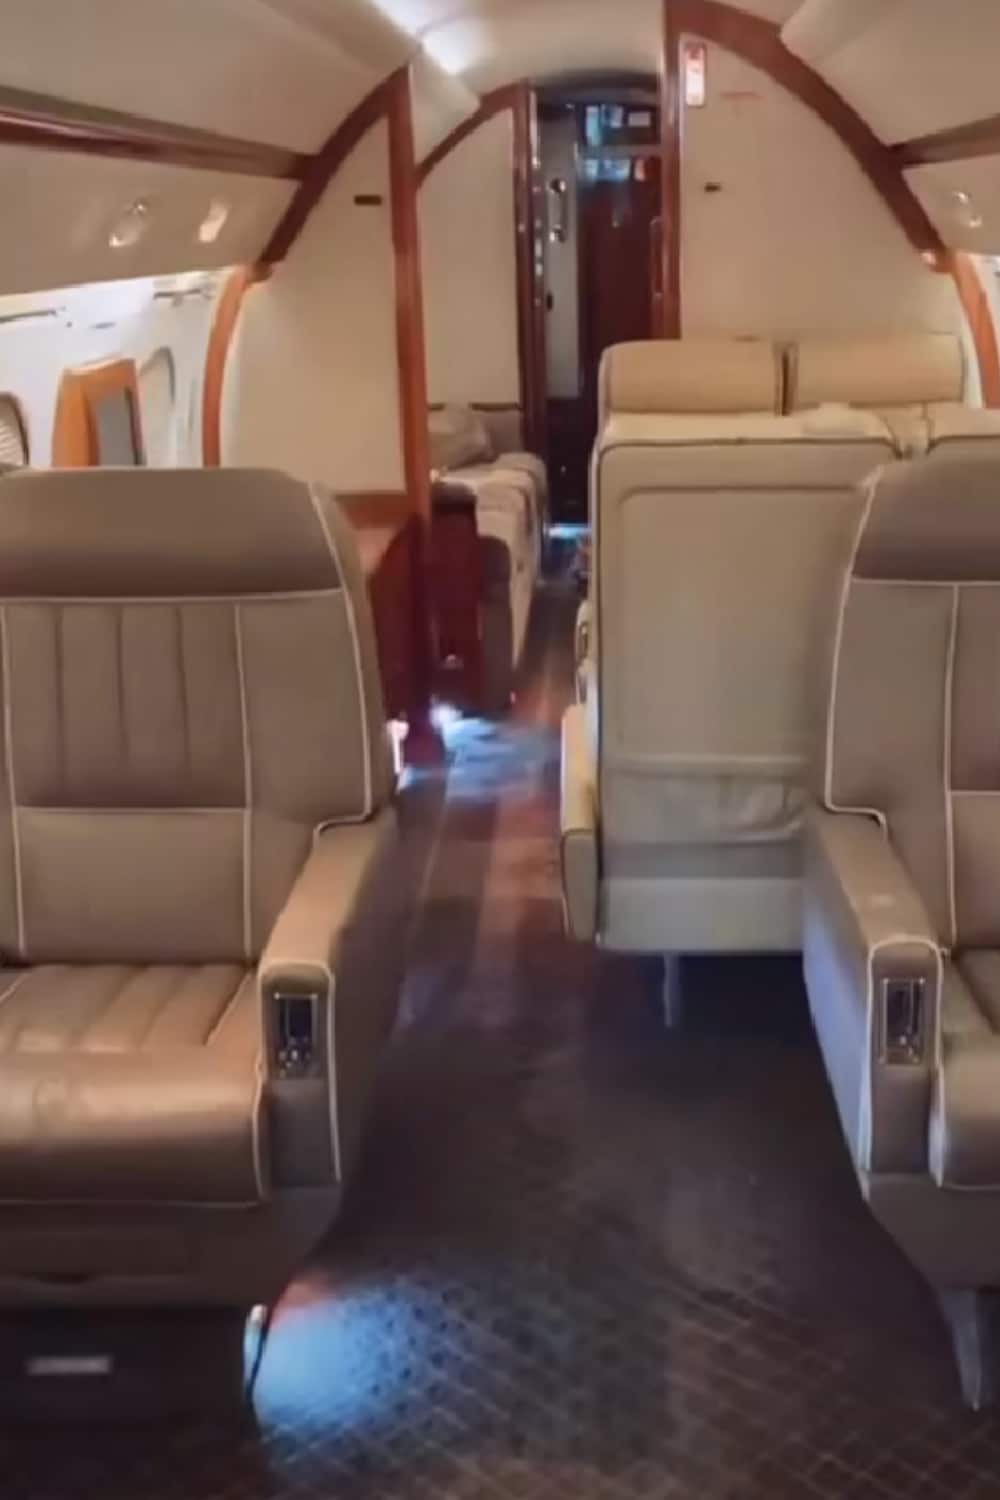 "Private jet and mansion goals"- Funke Akindele enchants fans with lavish dreams (Video)